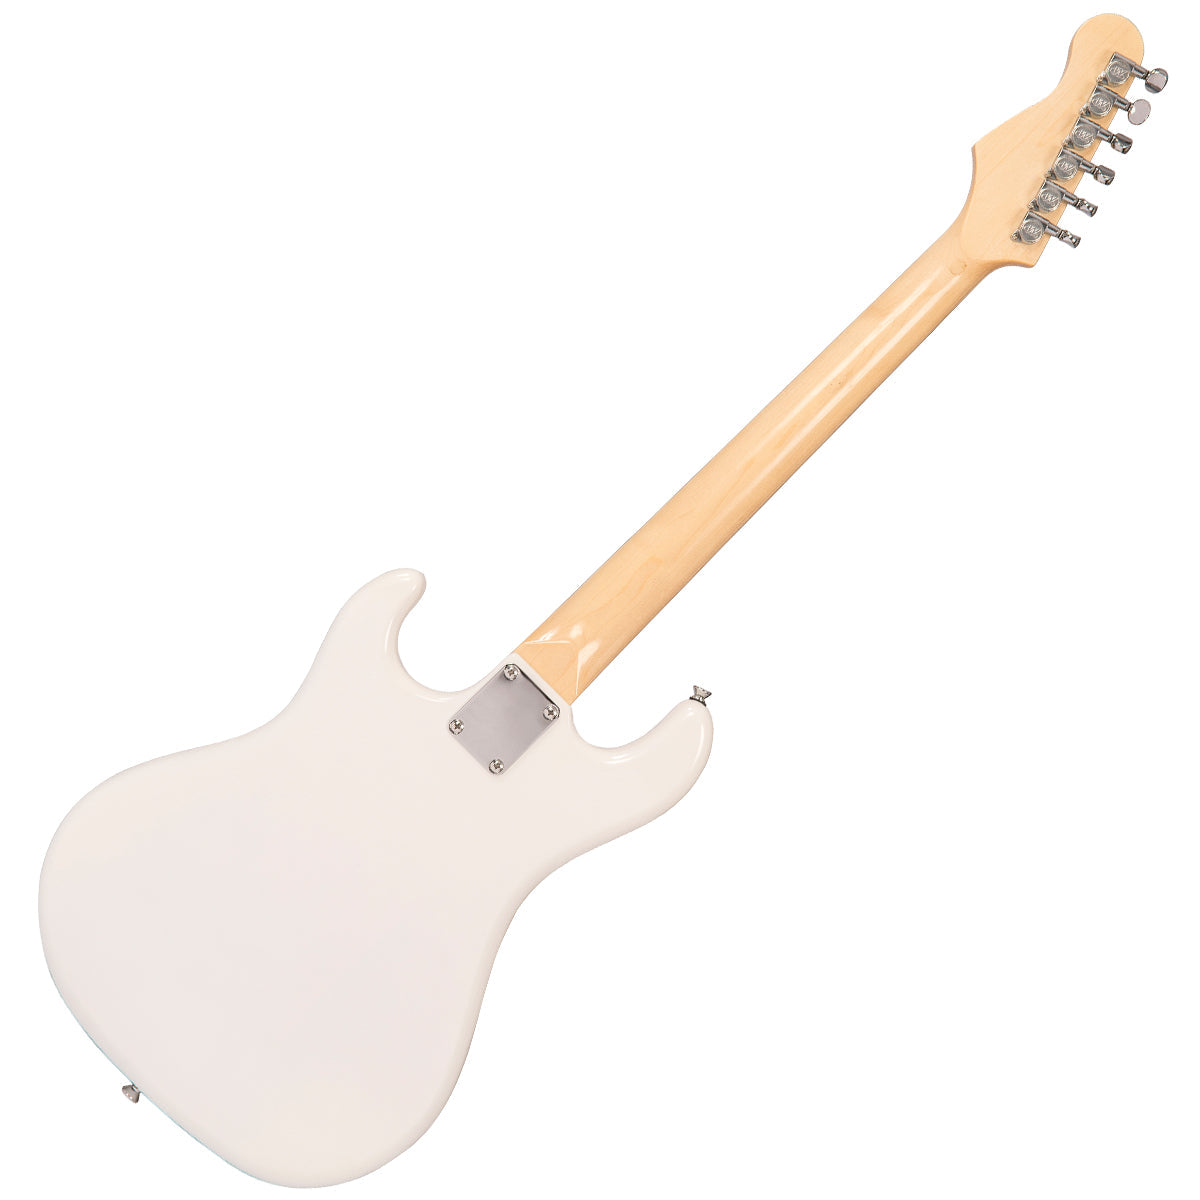 Rapier 22 Electric Guitar ~ Arctic White, Electric Guitar for sale at Richards Guitars.